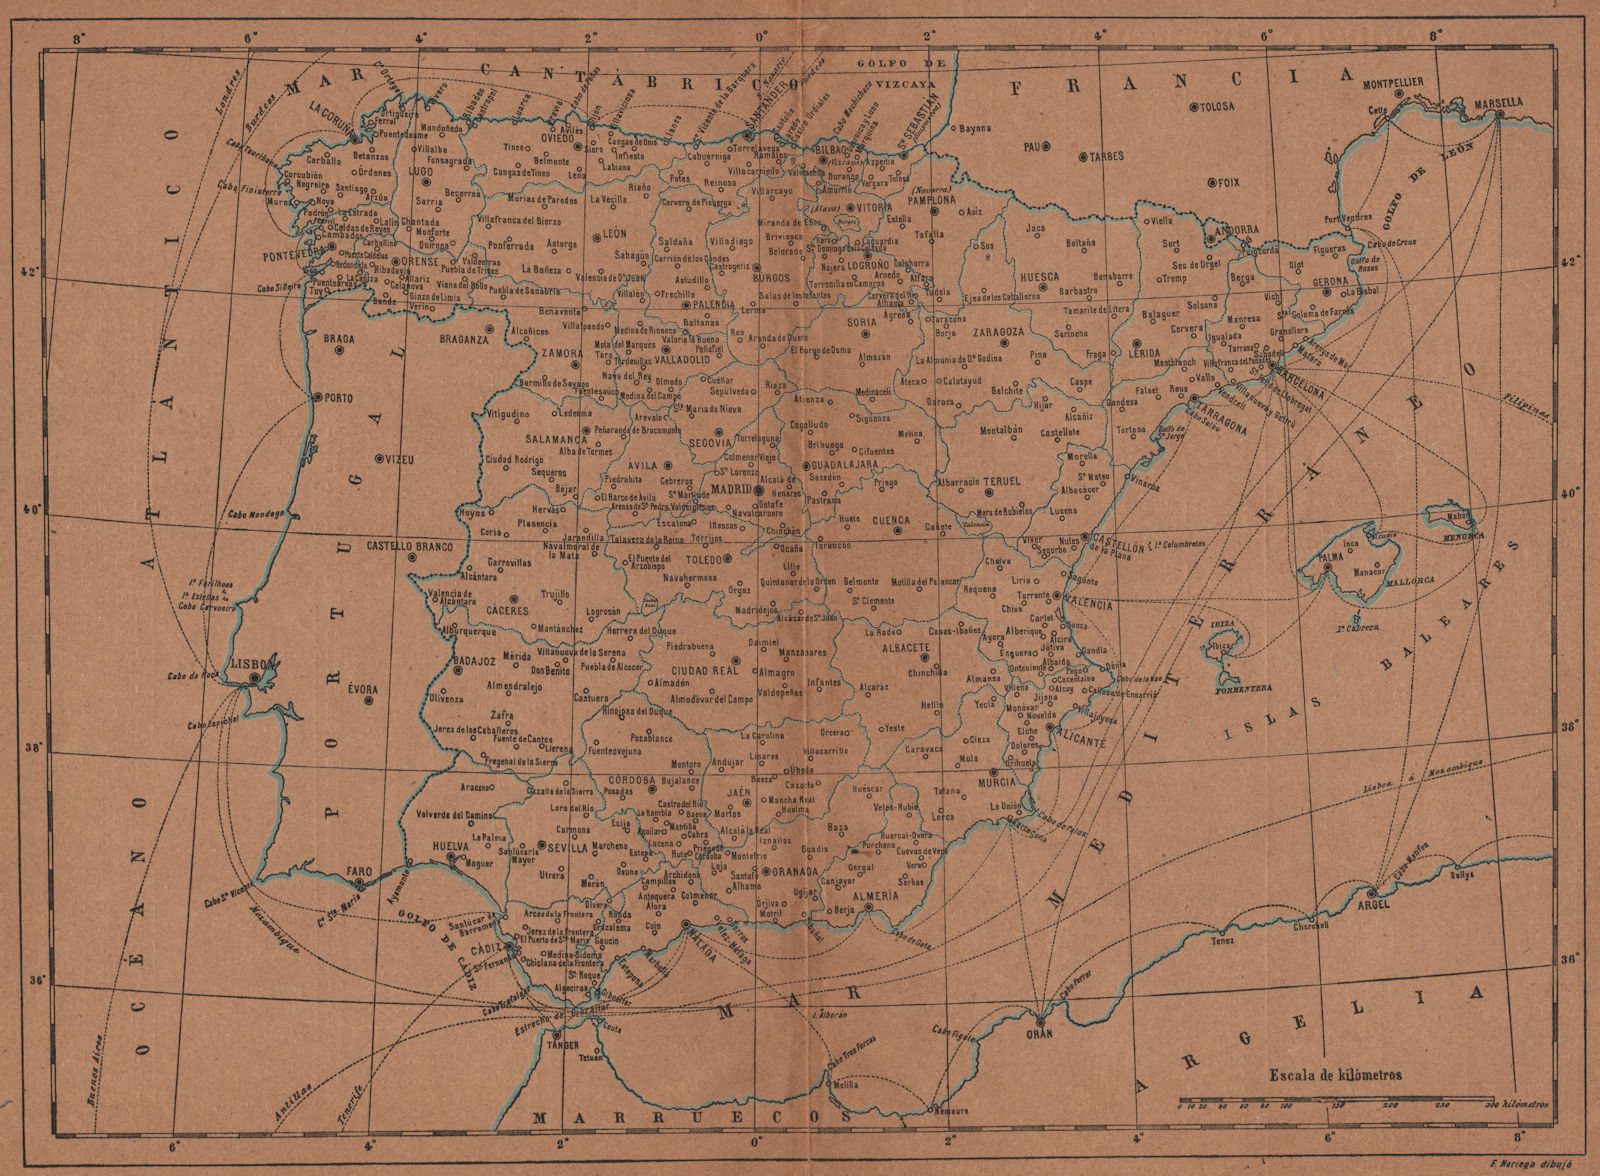 Associate Product SPAIN ESPAÑA. Mapa antiguo 1905 old antique vintage plan chart